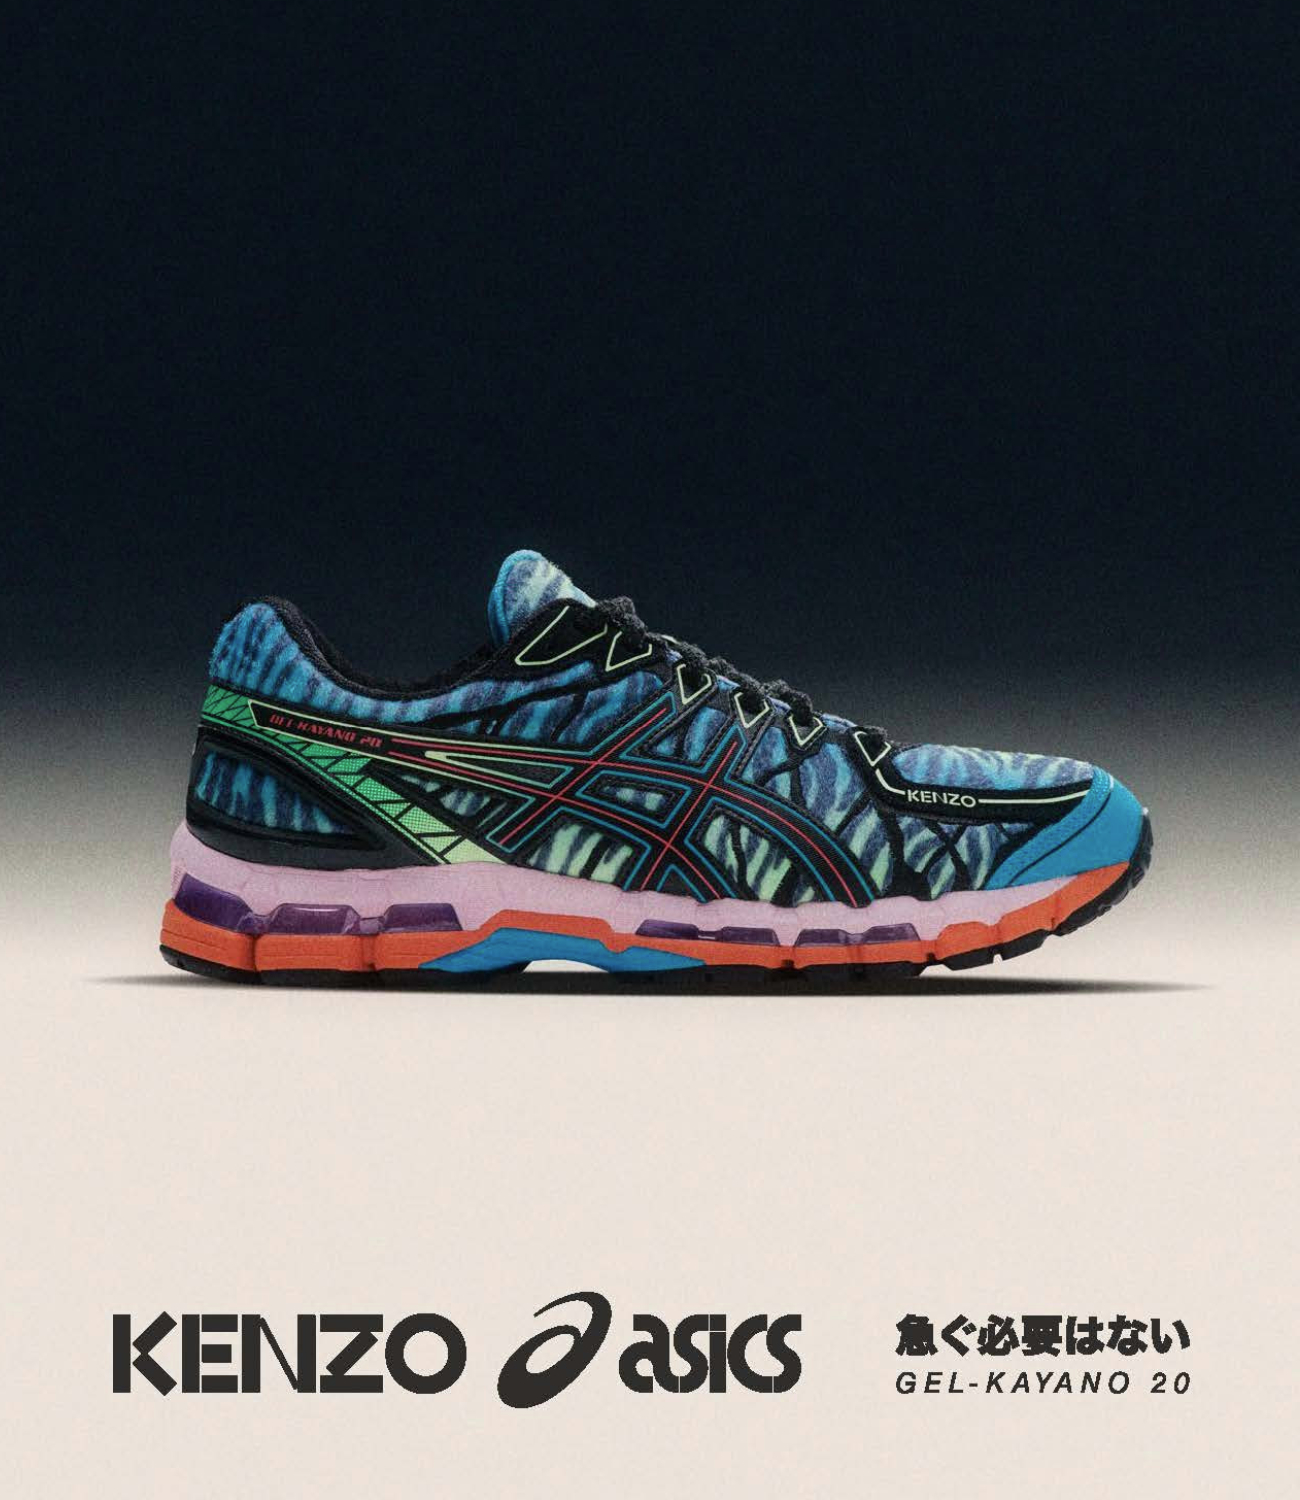 KENZO's ASICS GEL-Kayano 20 Sneaker Is a Wild Throwback